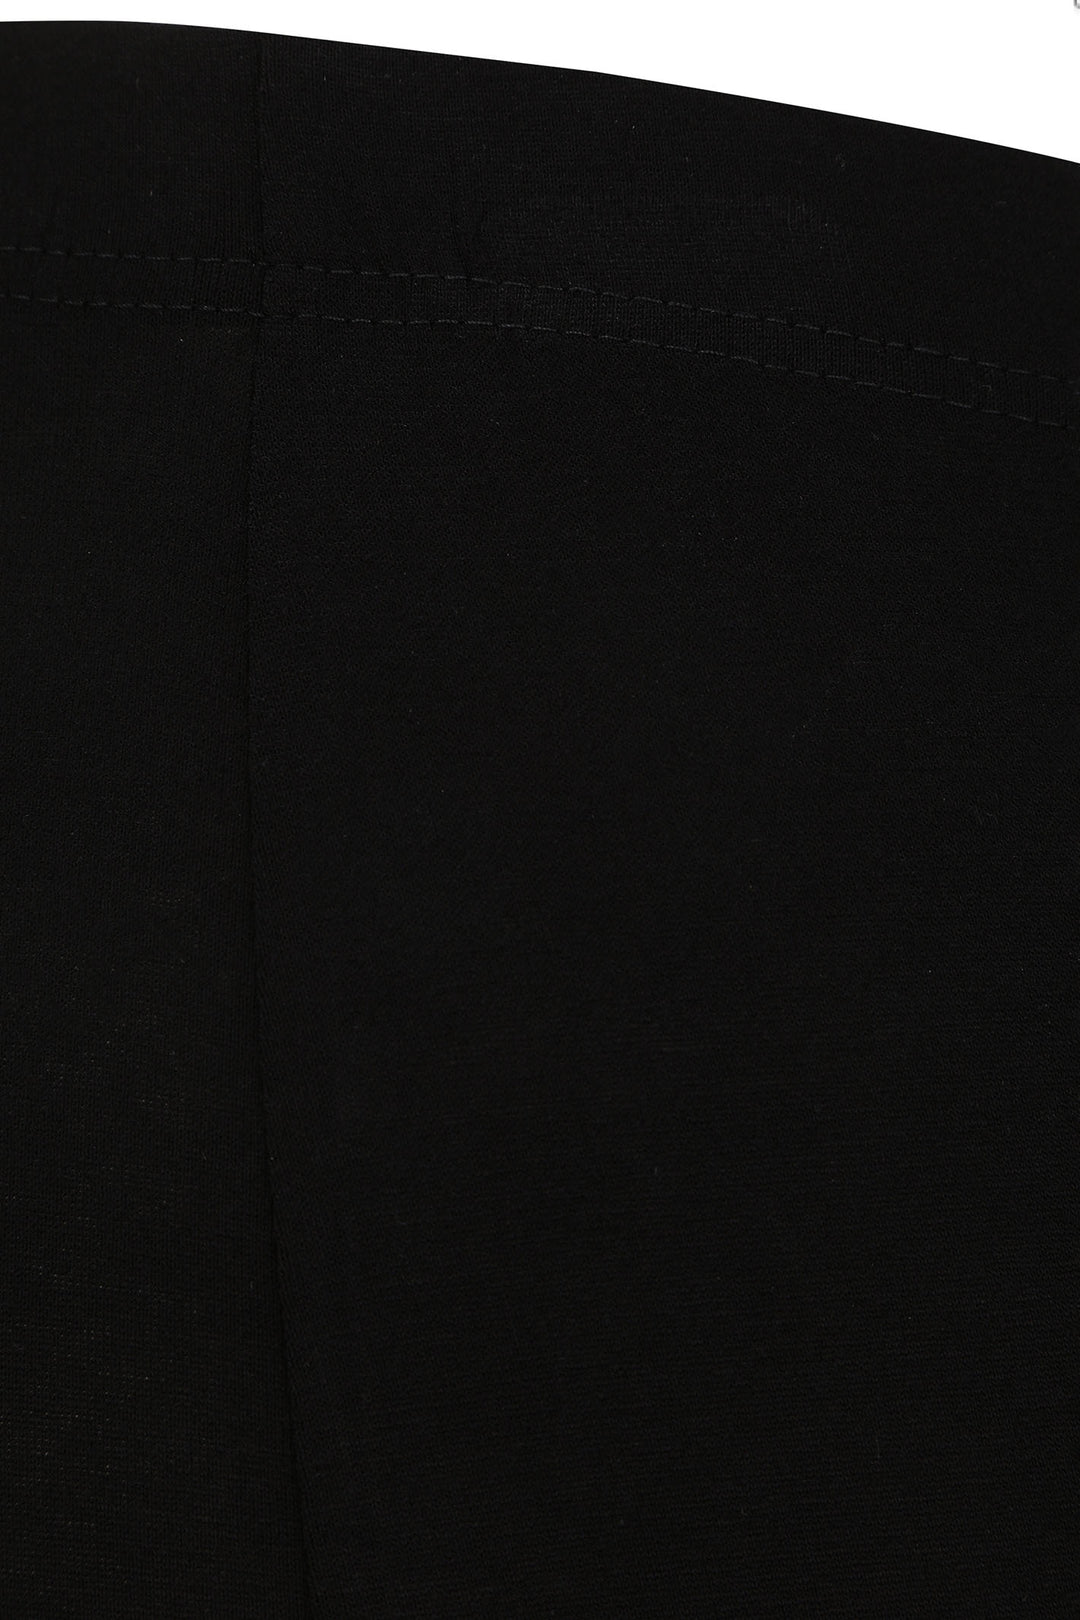 Doris Streich 809270 99 Black Pull-On Jersey Trousers - Shirley Allum Boutique